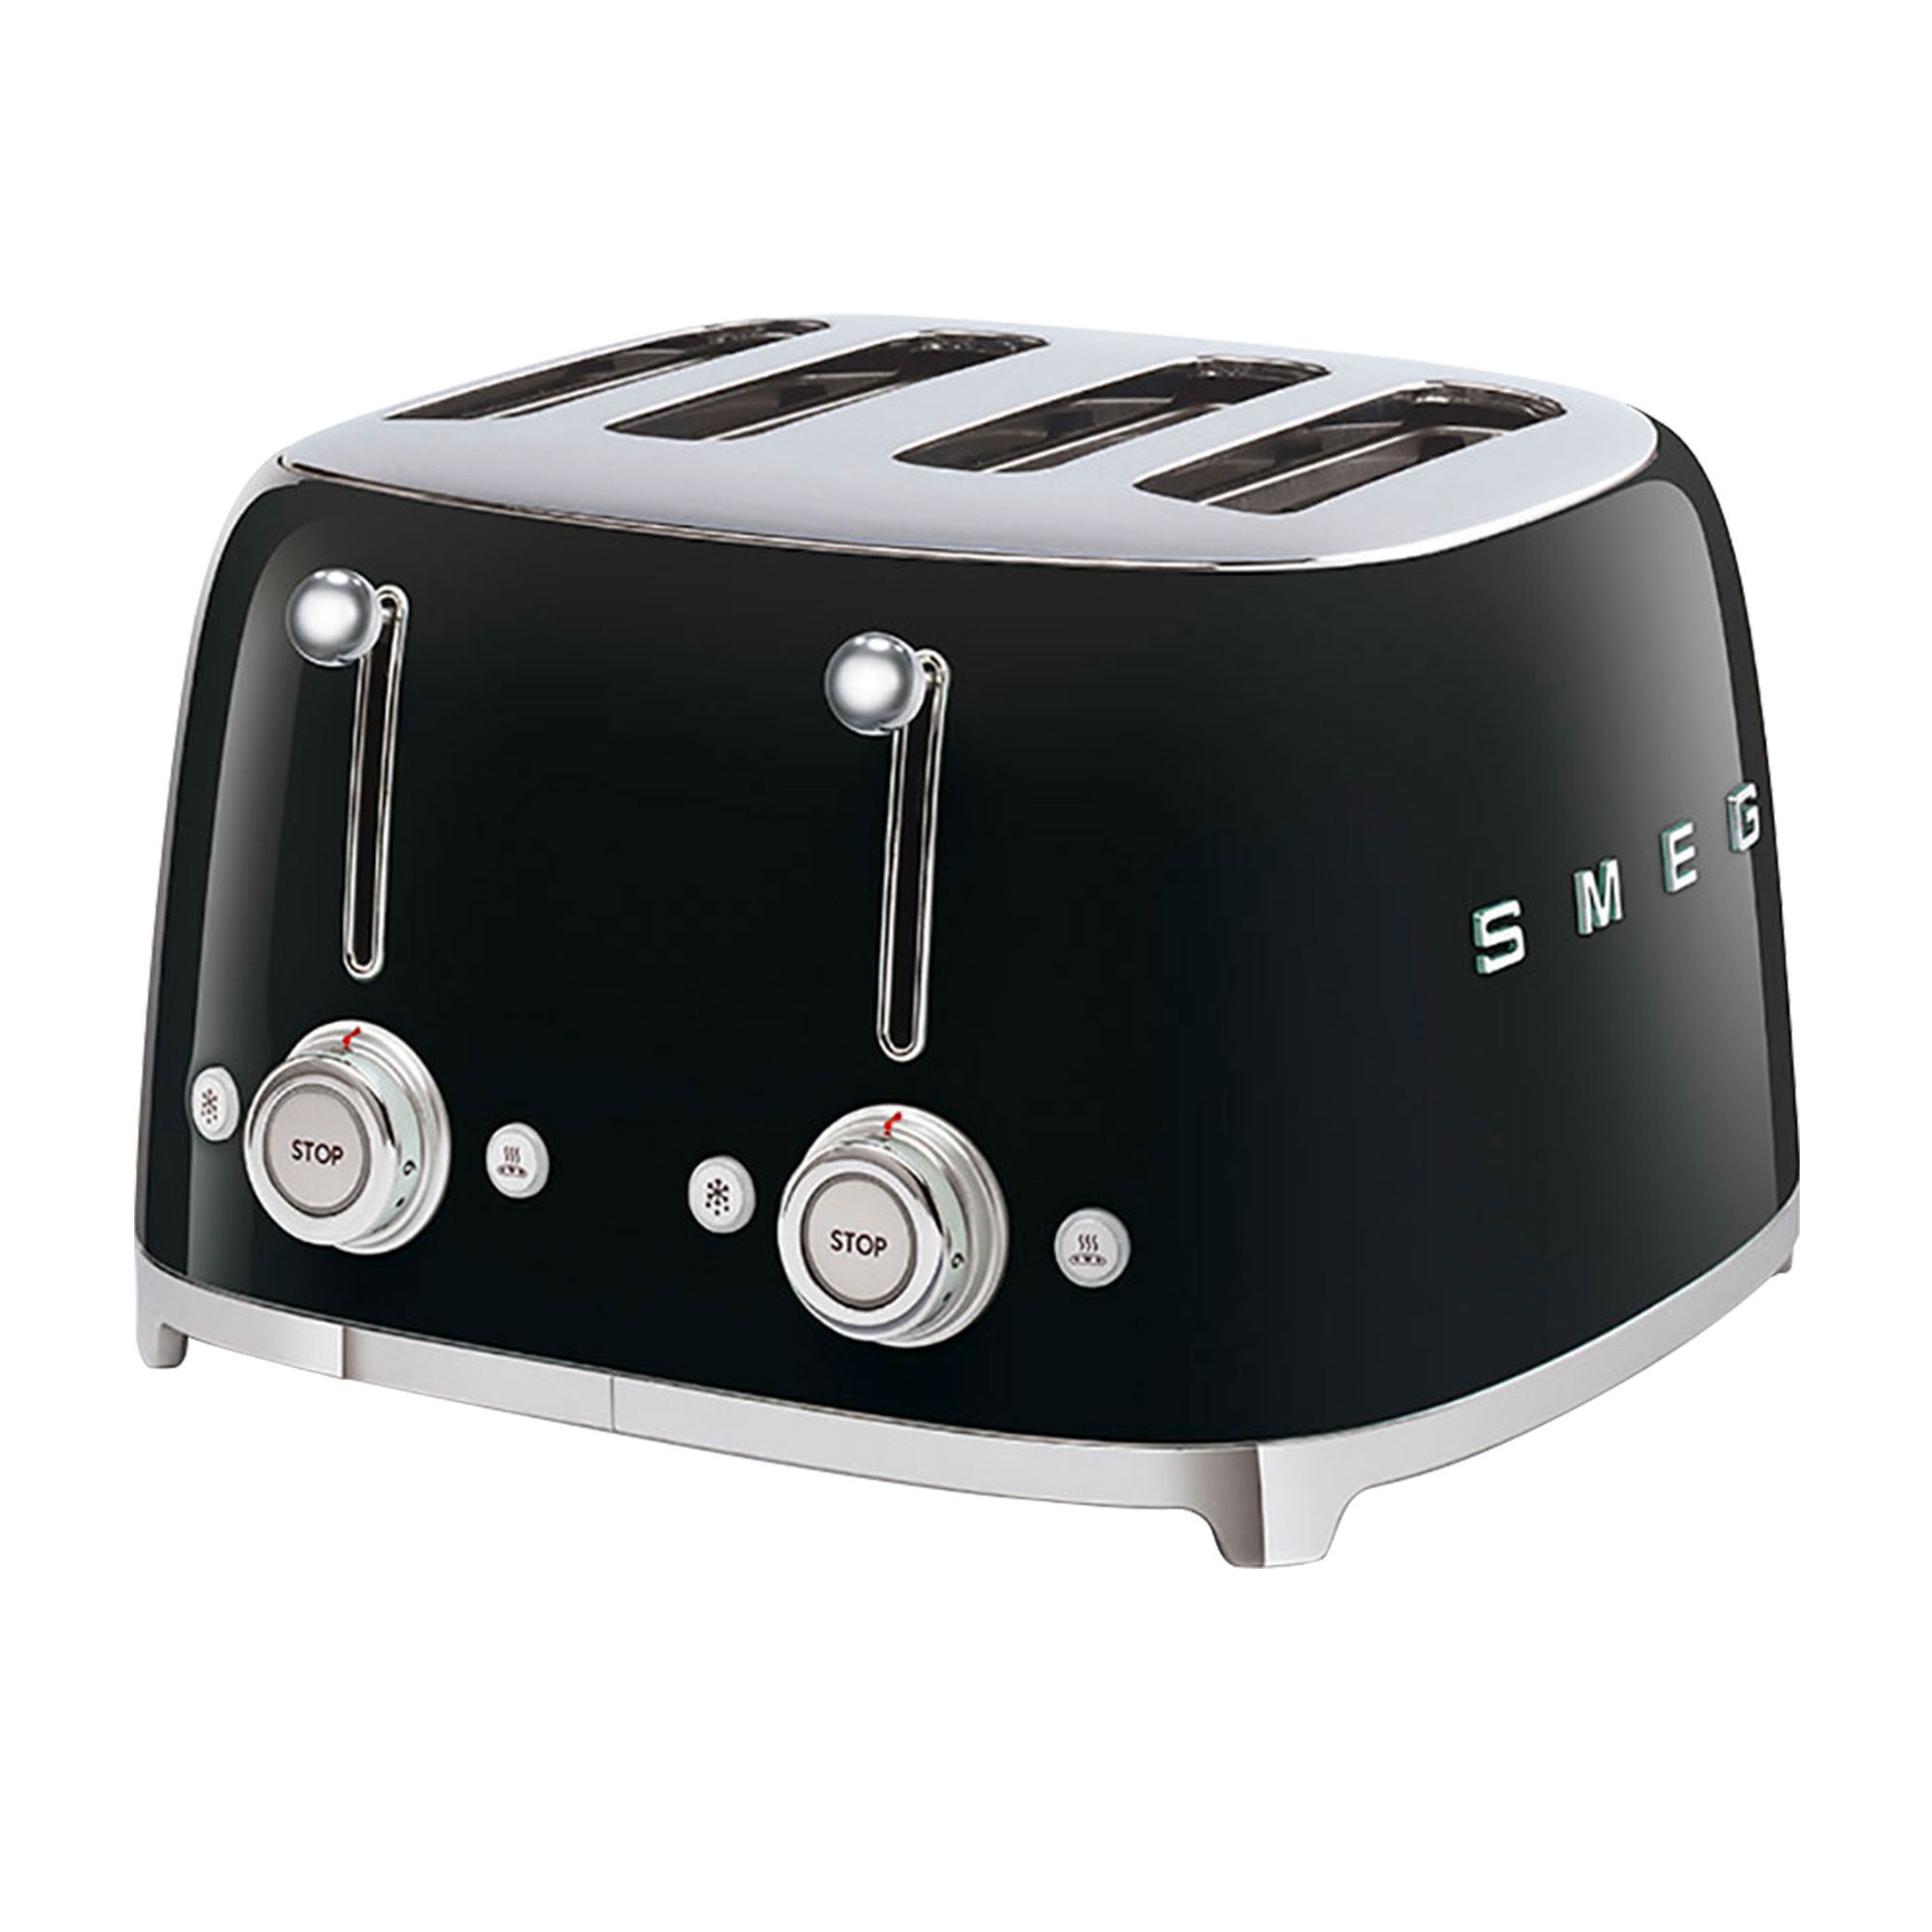 Smeg 50's Retro Style 4 Slot Toaster Black Image 1